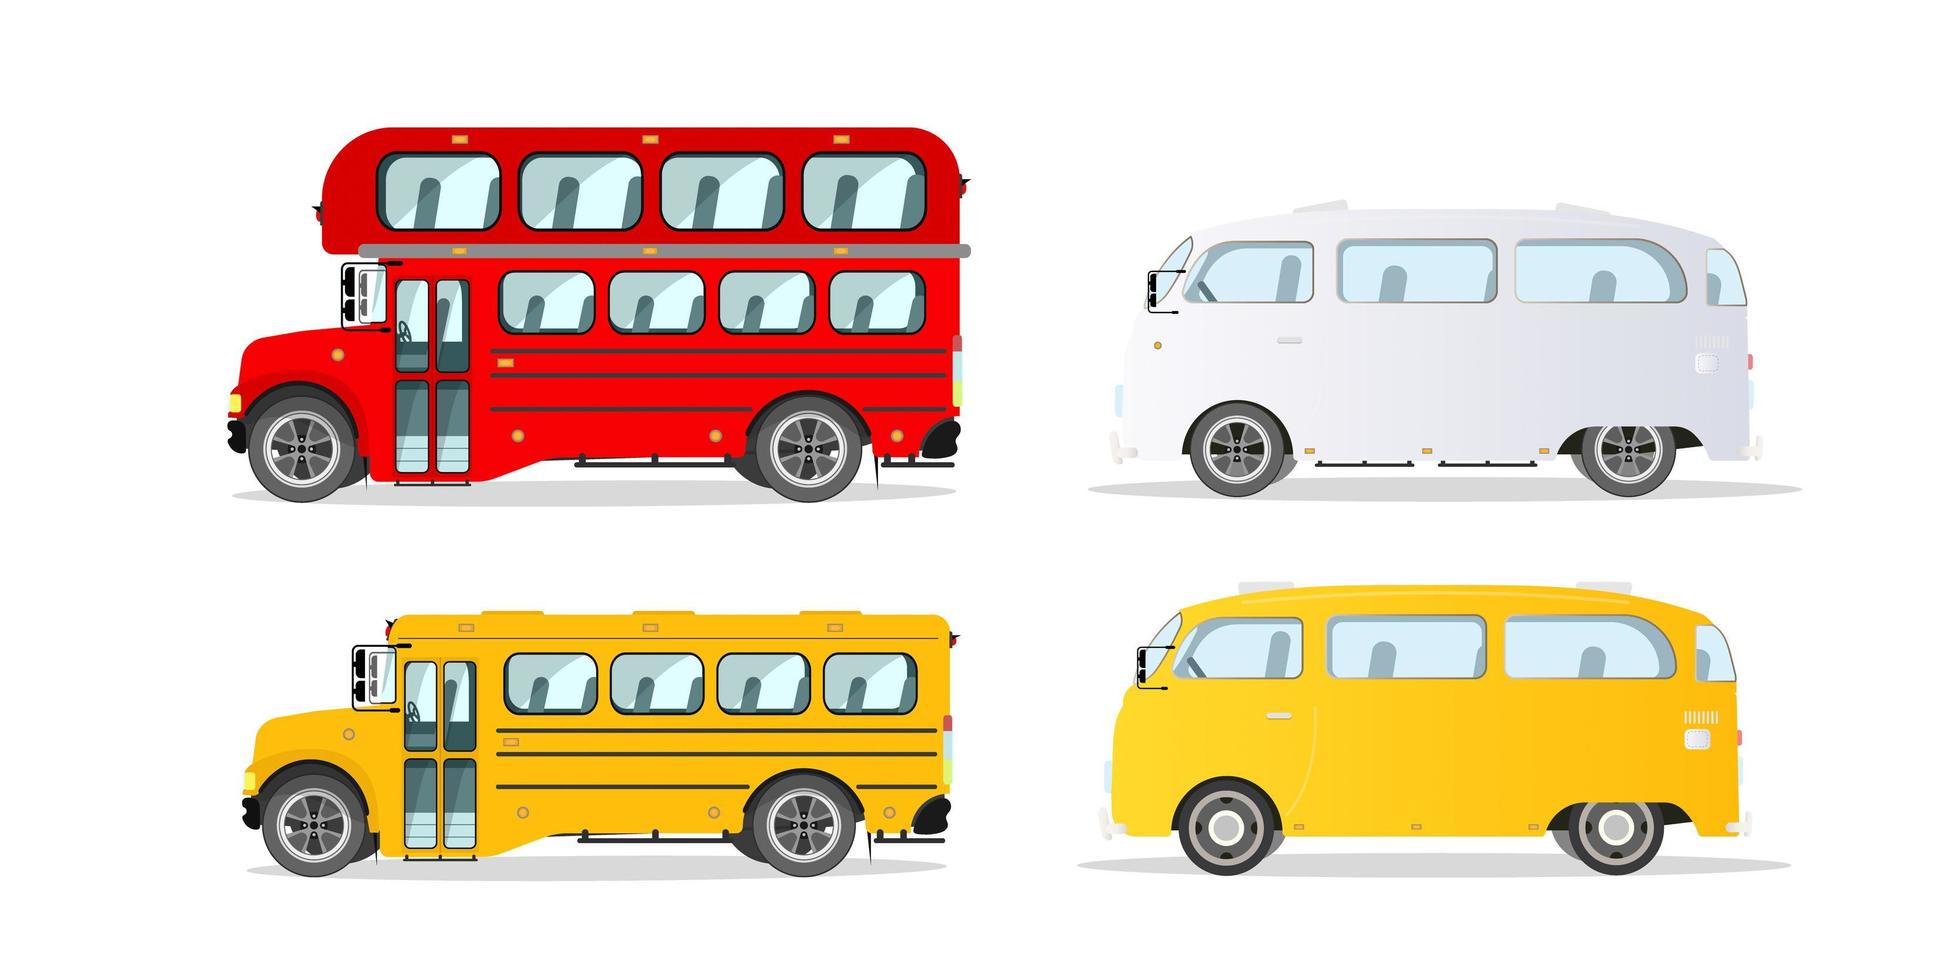 conjunto de ônibus isolados no fundo branco. ônibus escolar, transporte público. vetor. vetor